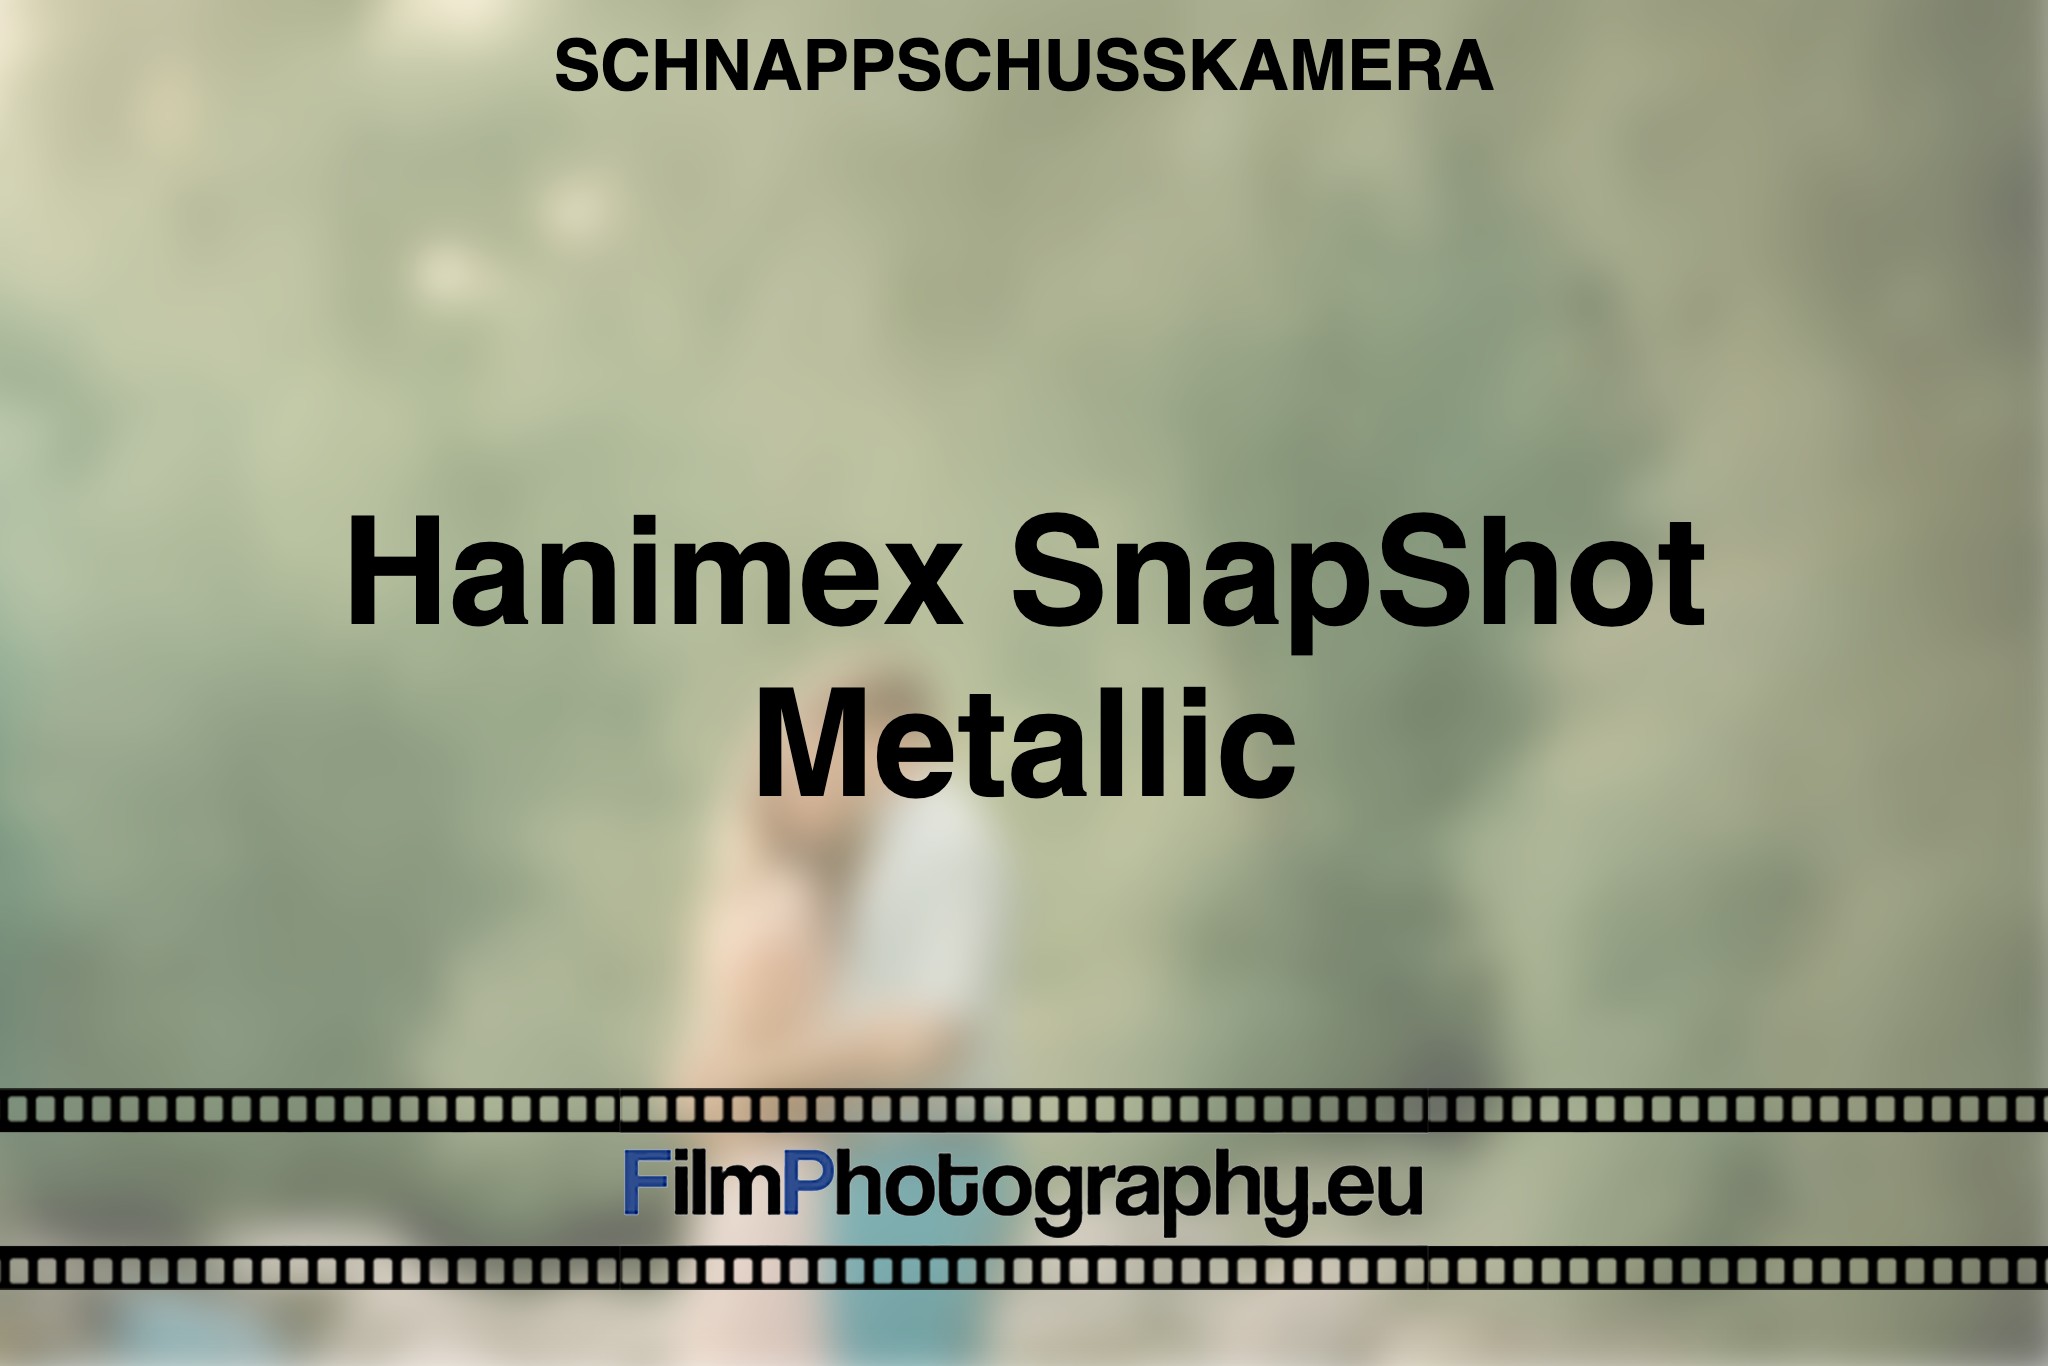 hanimex-snapshot-metallic-schnappschusskamera-bnv